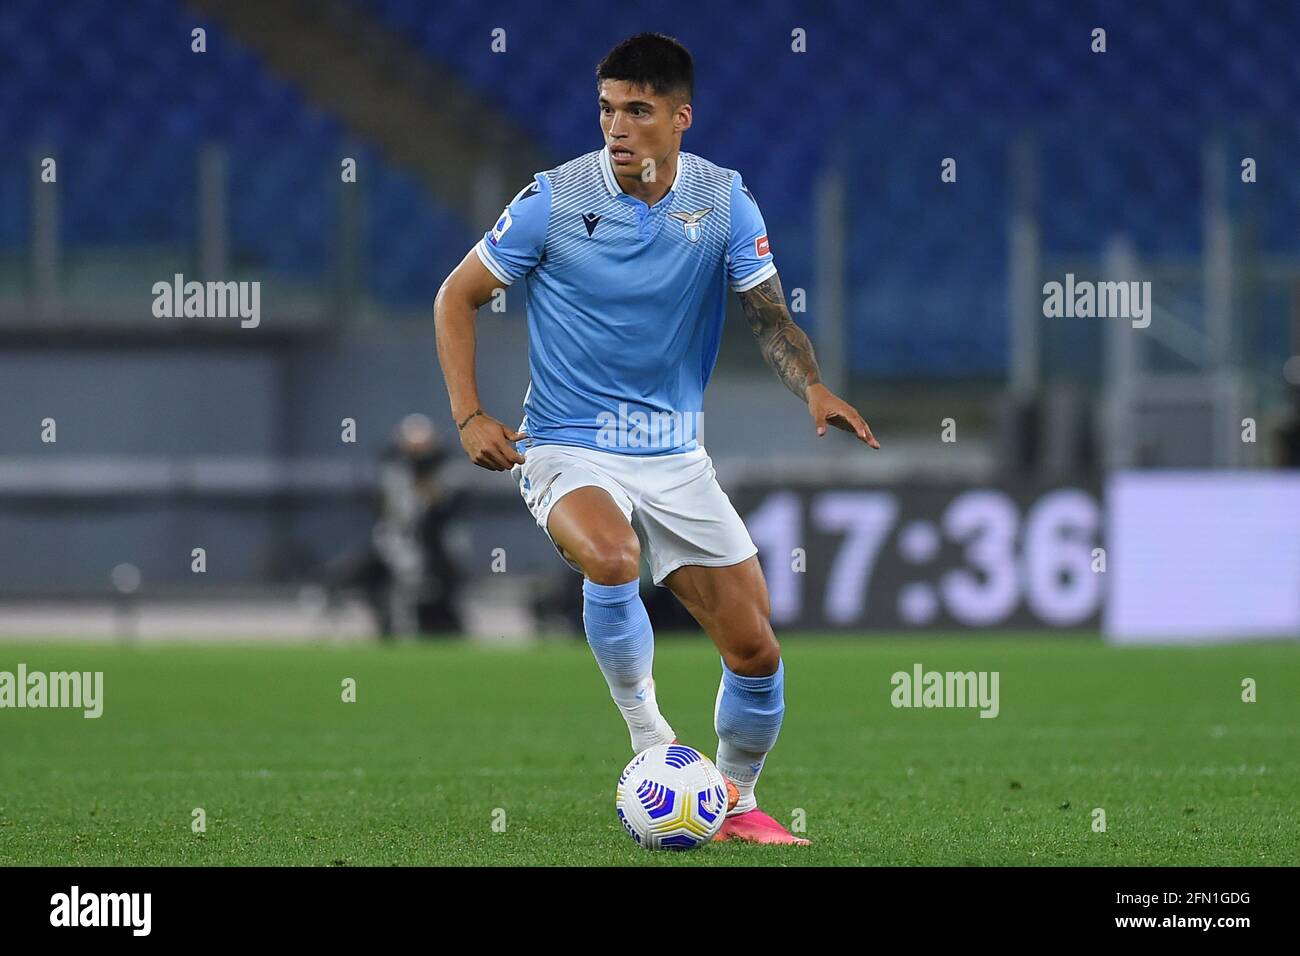 Rome, Italy, 12 May, 2021 at the Lazio vs Parma Serie A League Credit:Roberto Ramaccia/Alamy Live News Stockfoto